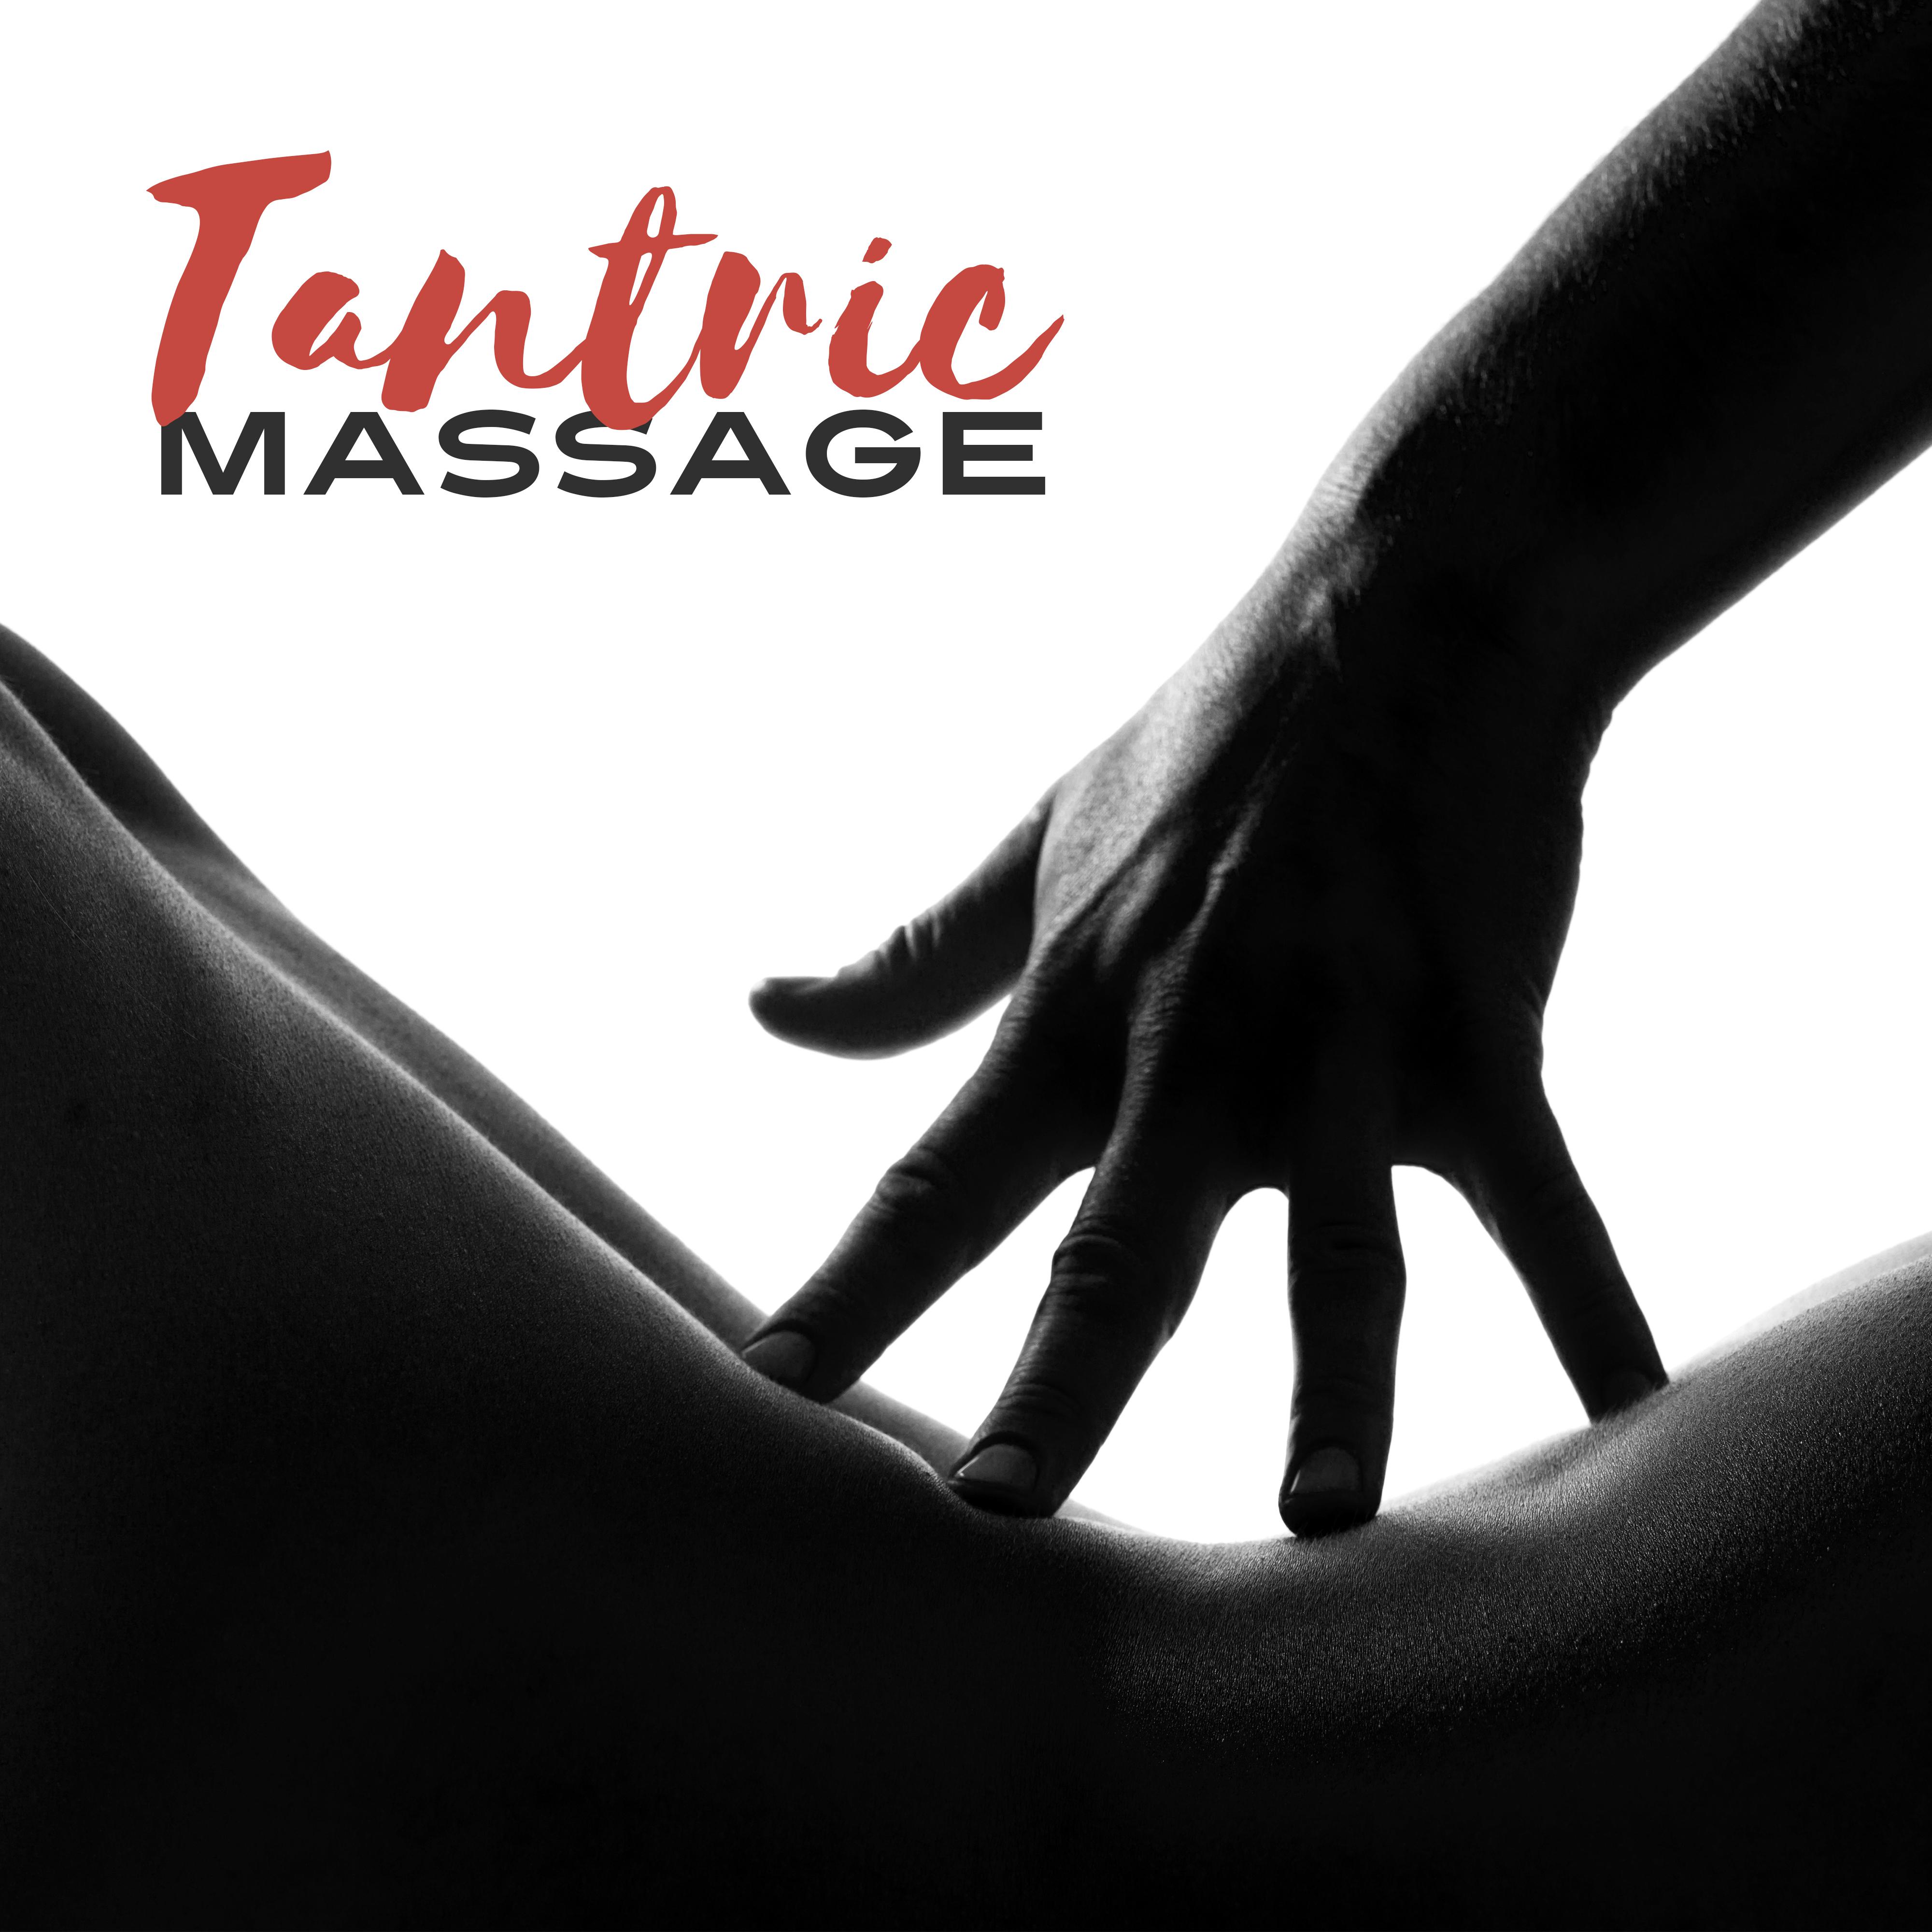 Tantric Massage